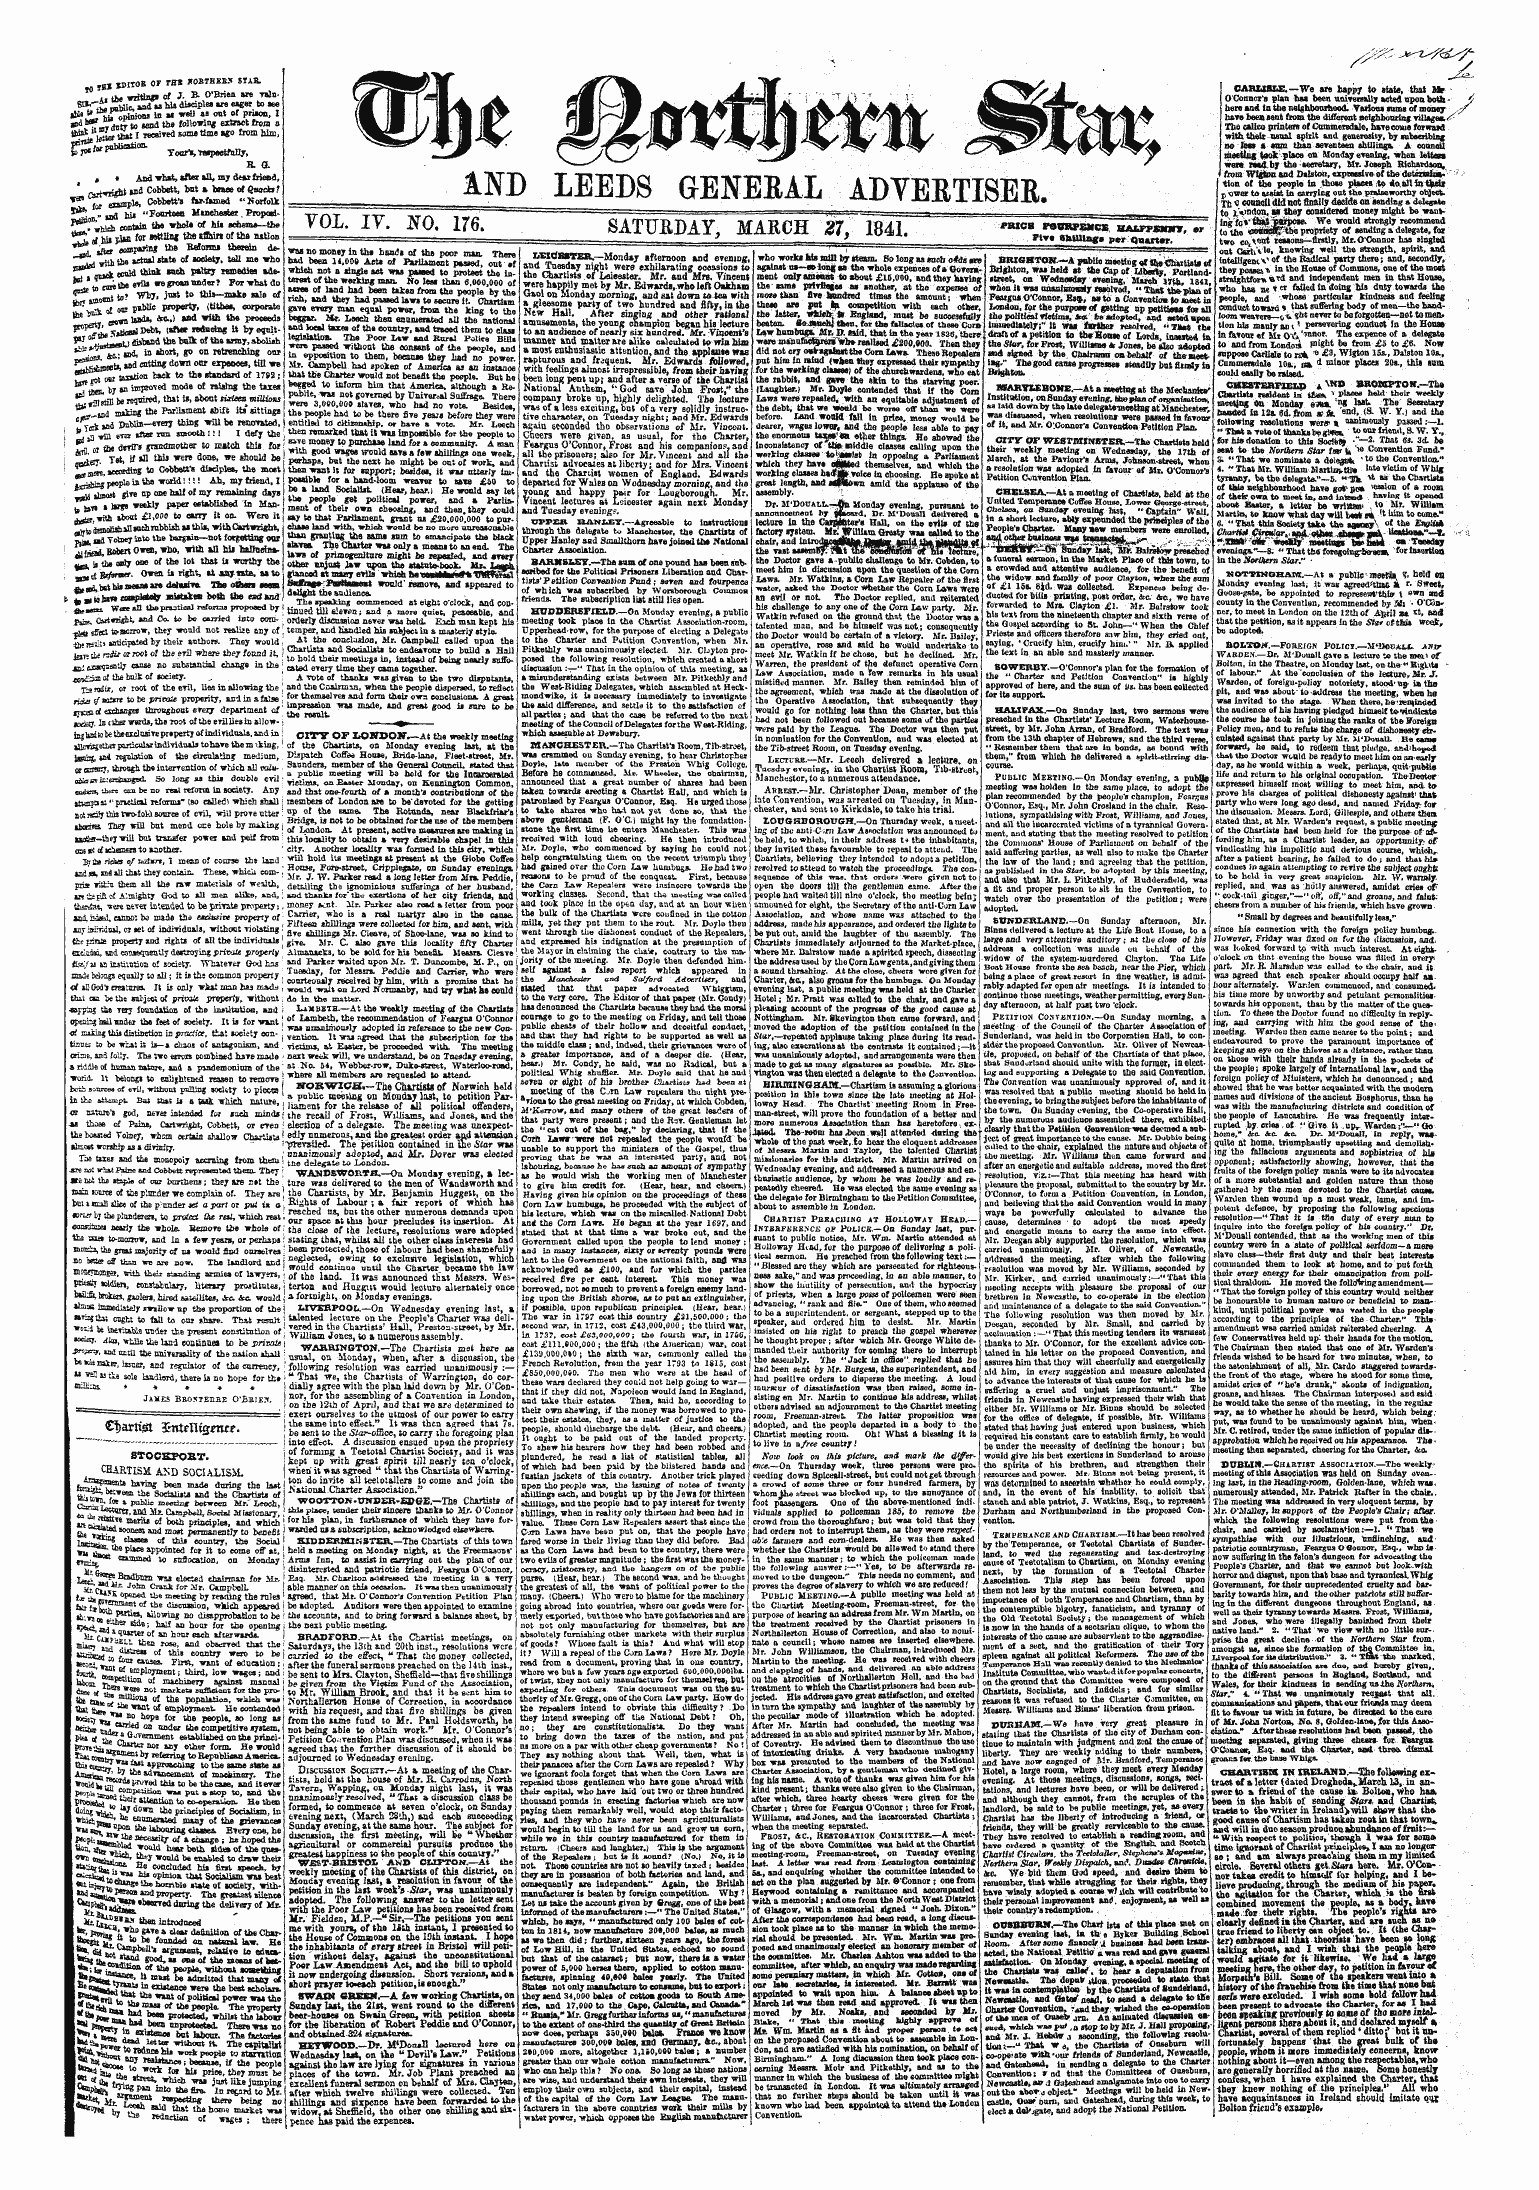 Northern Star (1837-1852): jS F Y, 4th edition: 1